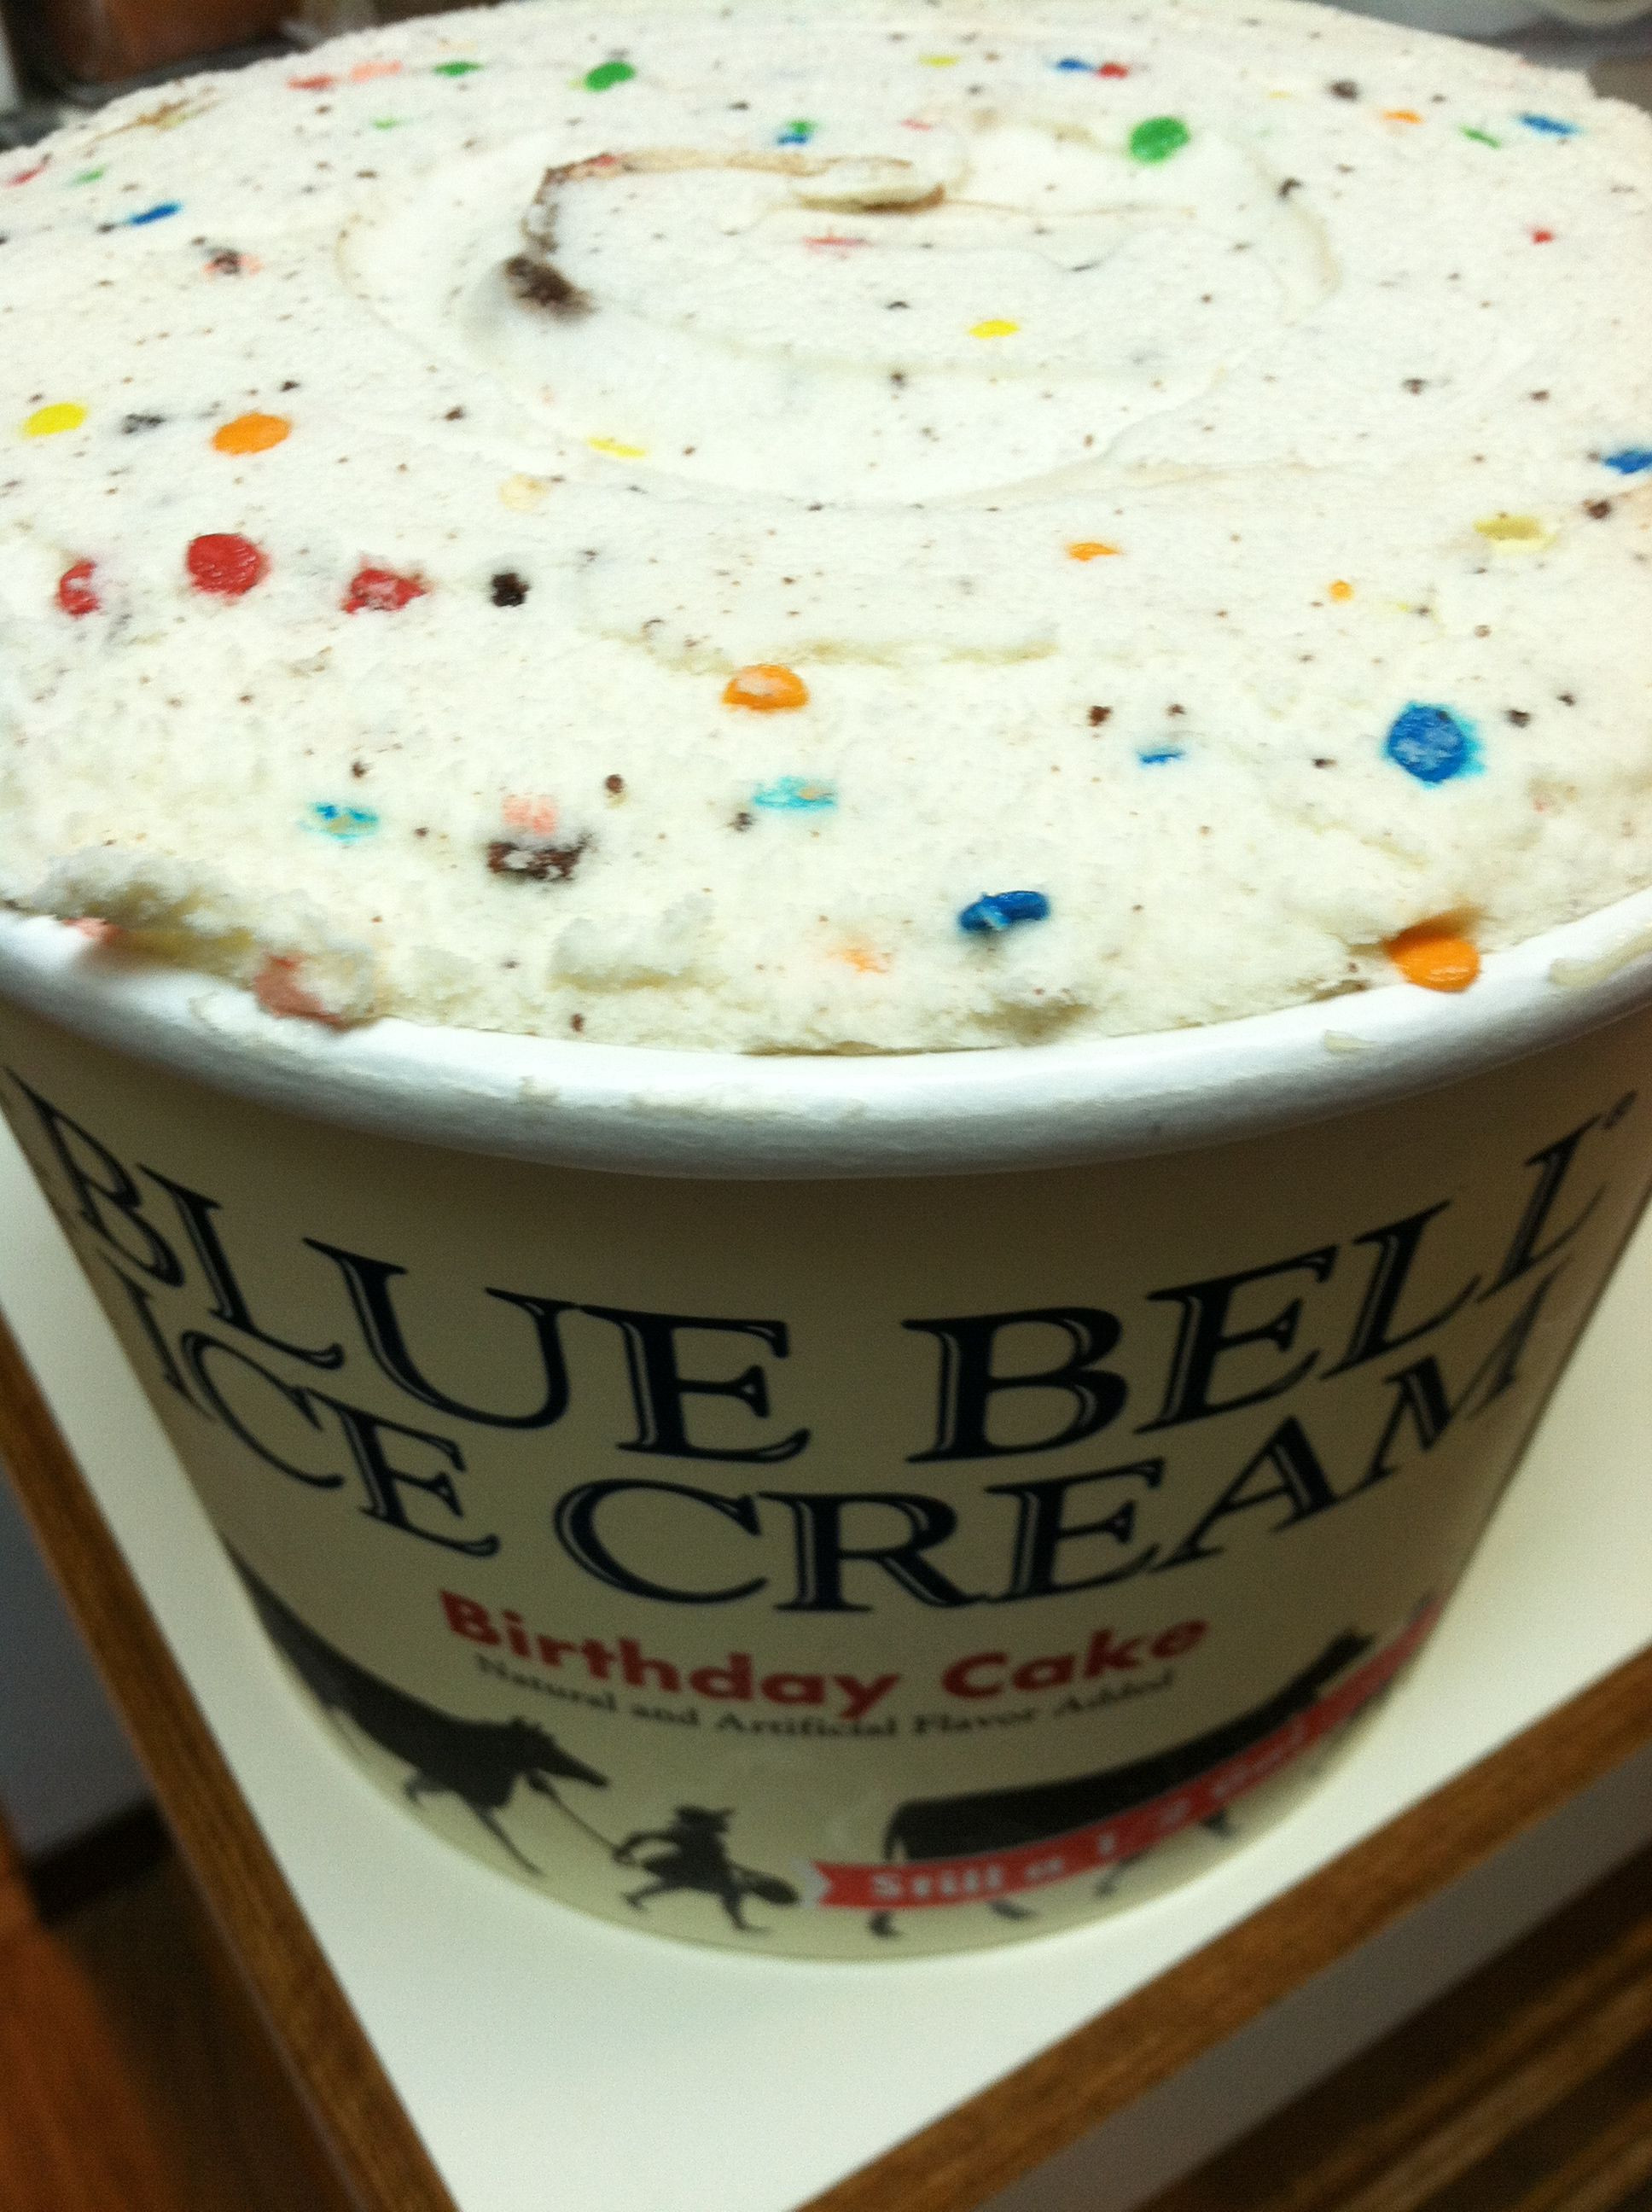 Blue Bell Birthday Cake Ice Cream
 Birthday Cake Blue Bell Ice Cream my favorite THIS IS